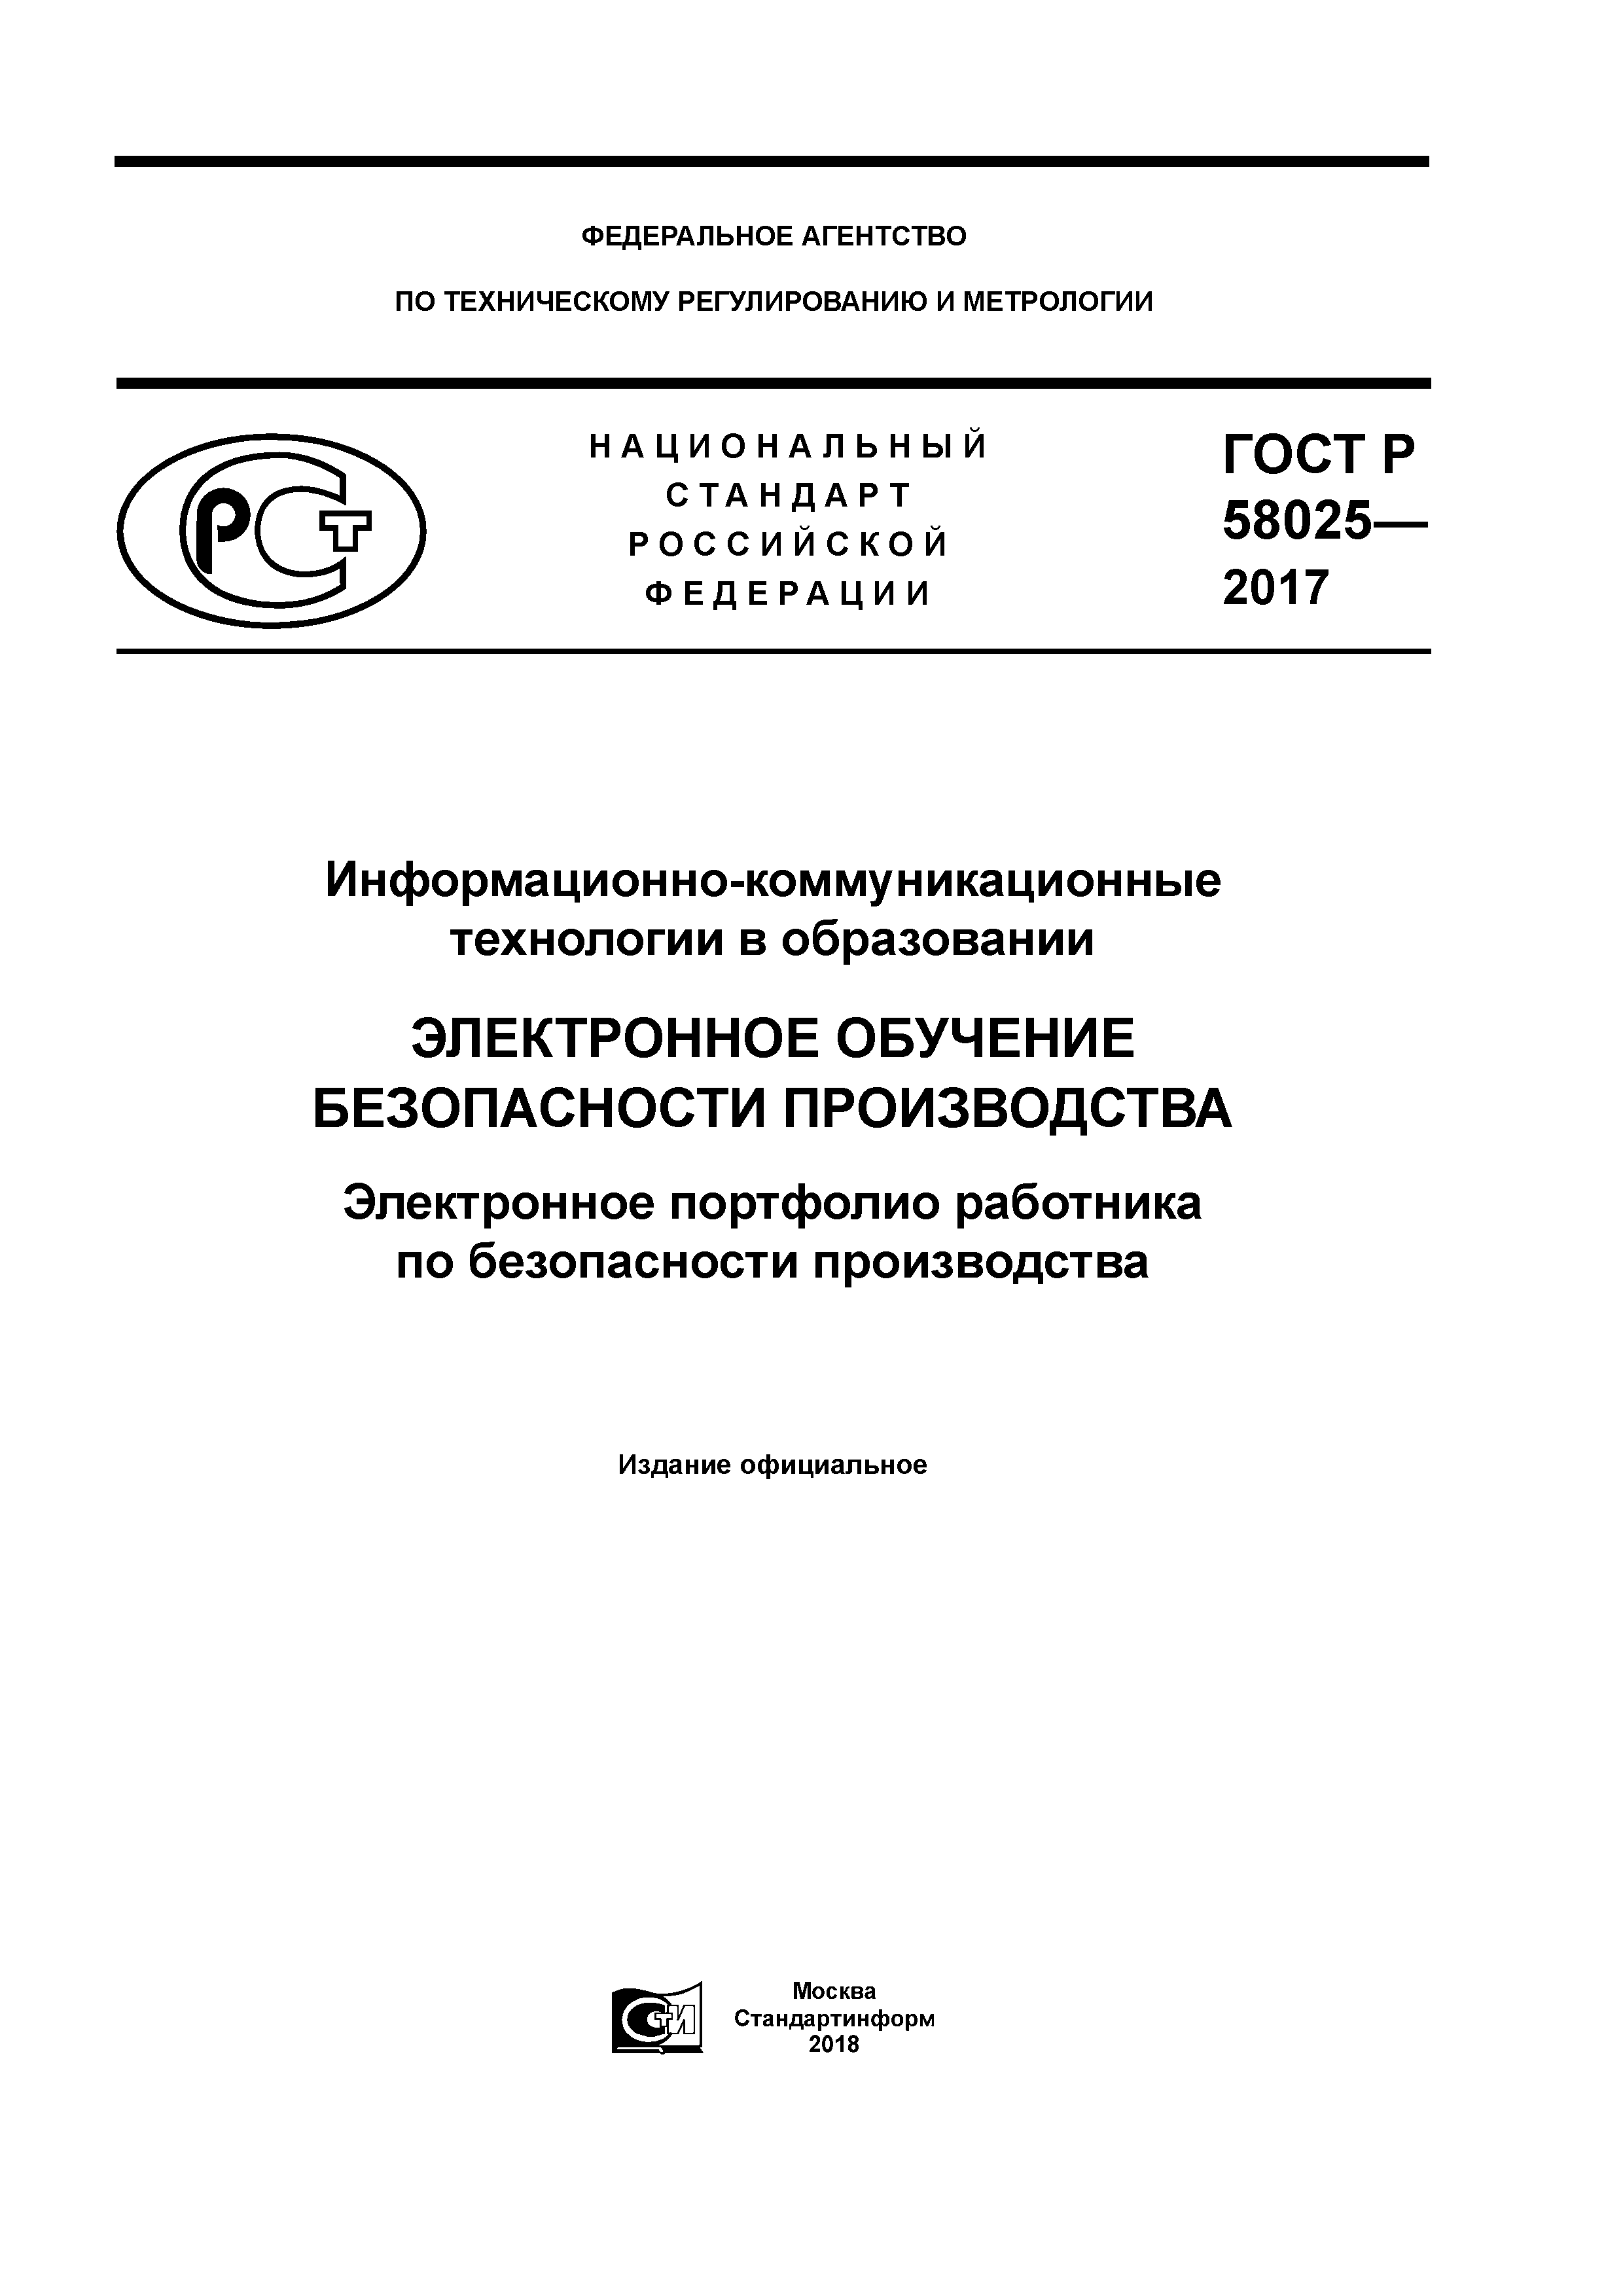 ГОСТ Р 58025-2017